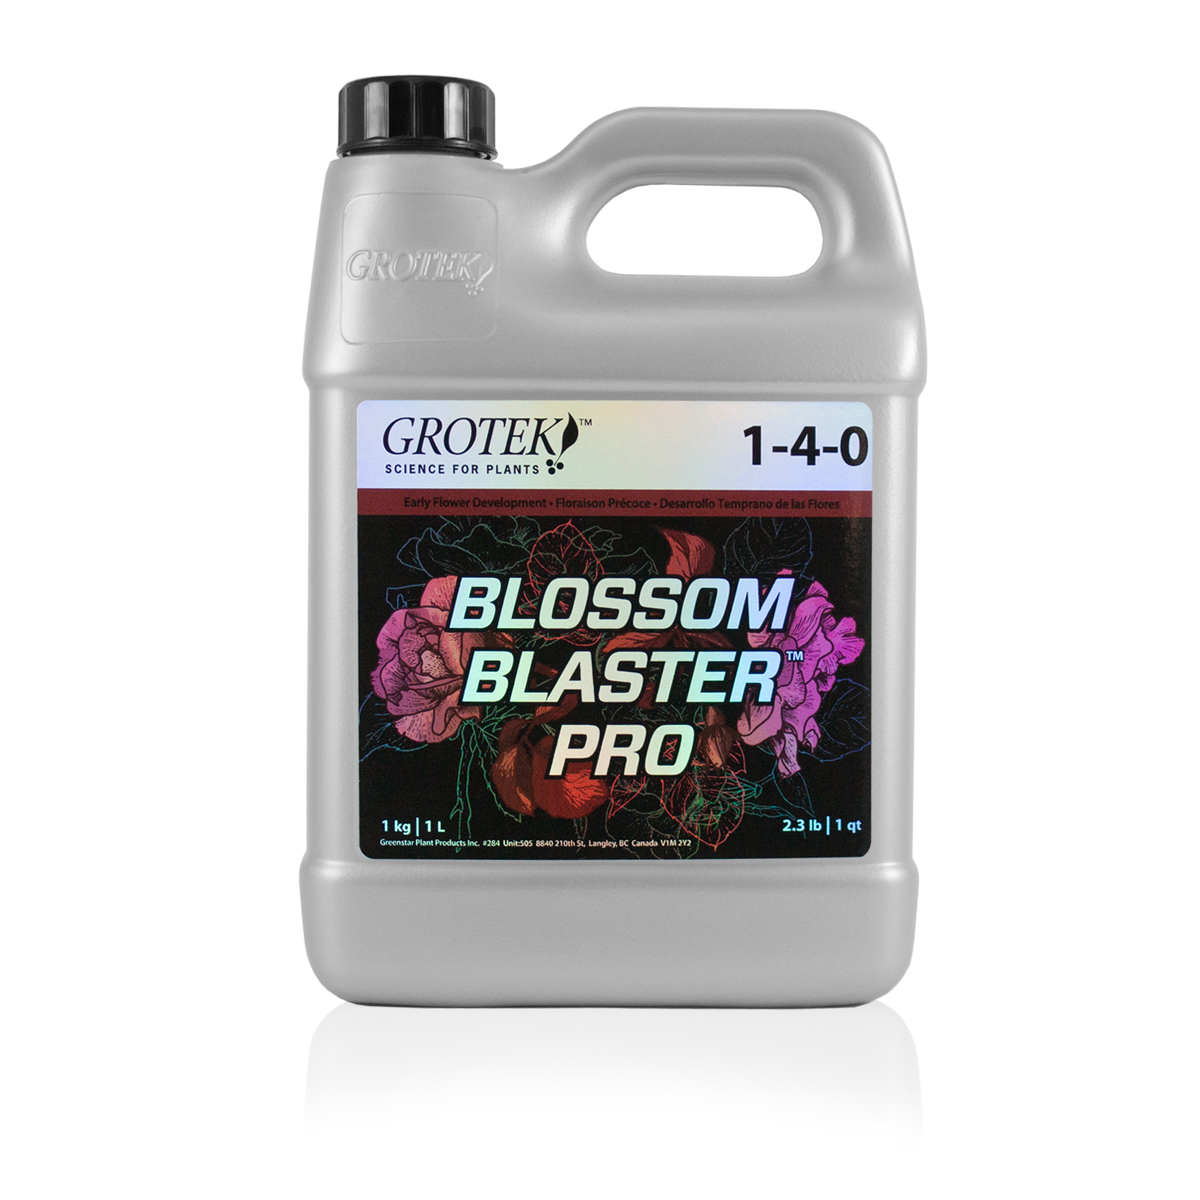 Blossom Blaster Pro by Grotek